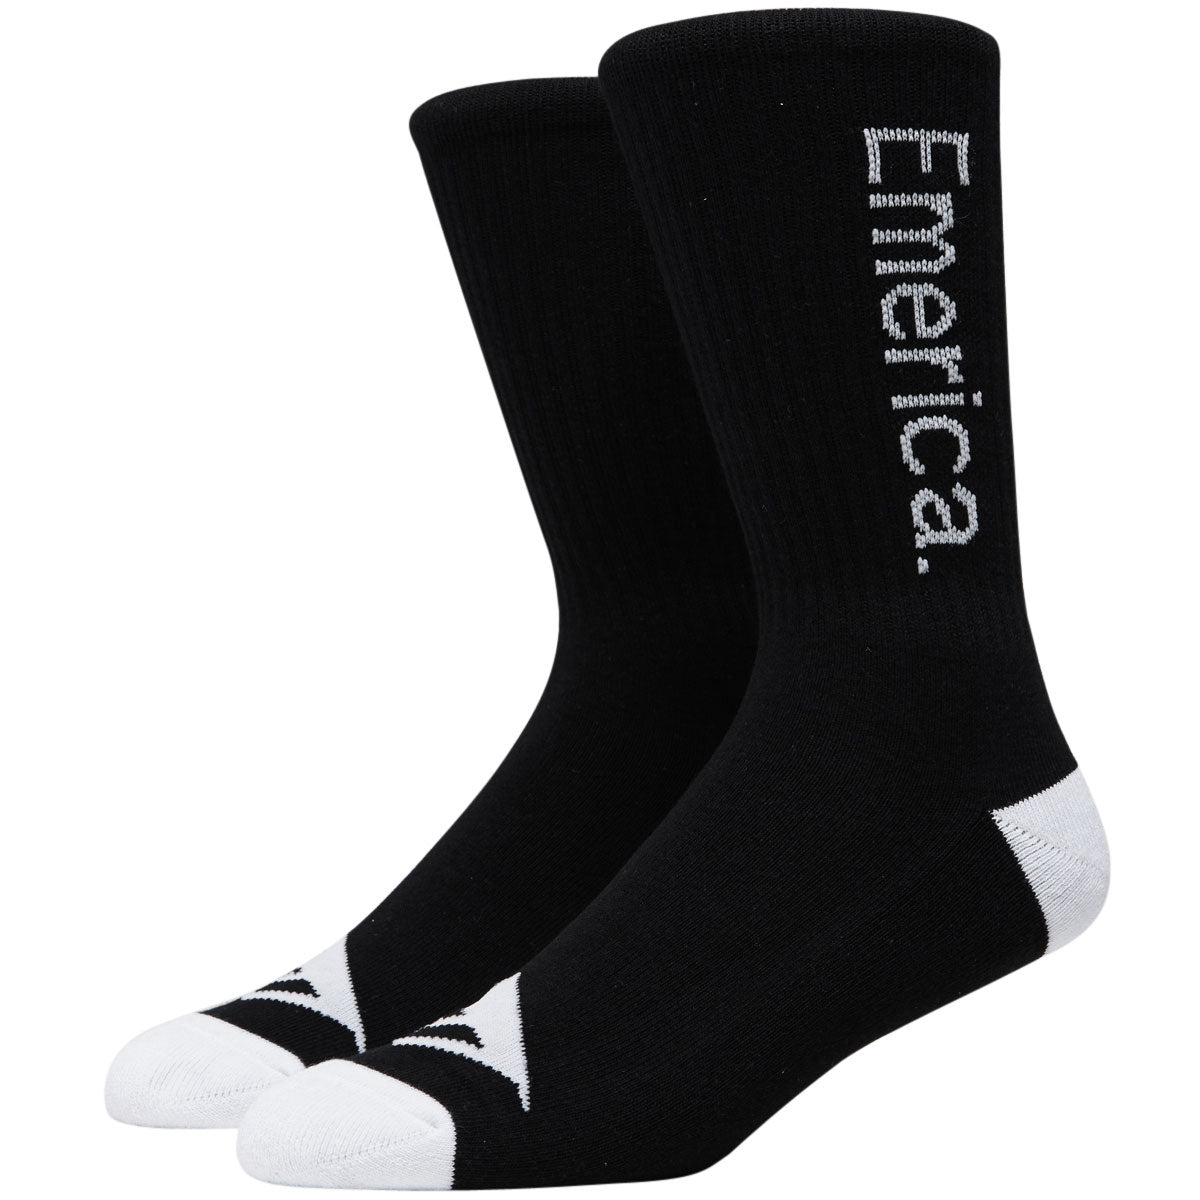 Emerica Pure Crew Socks - Black/White image 1